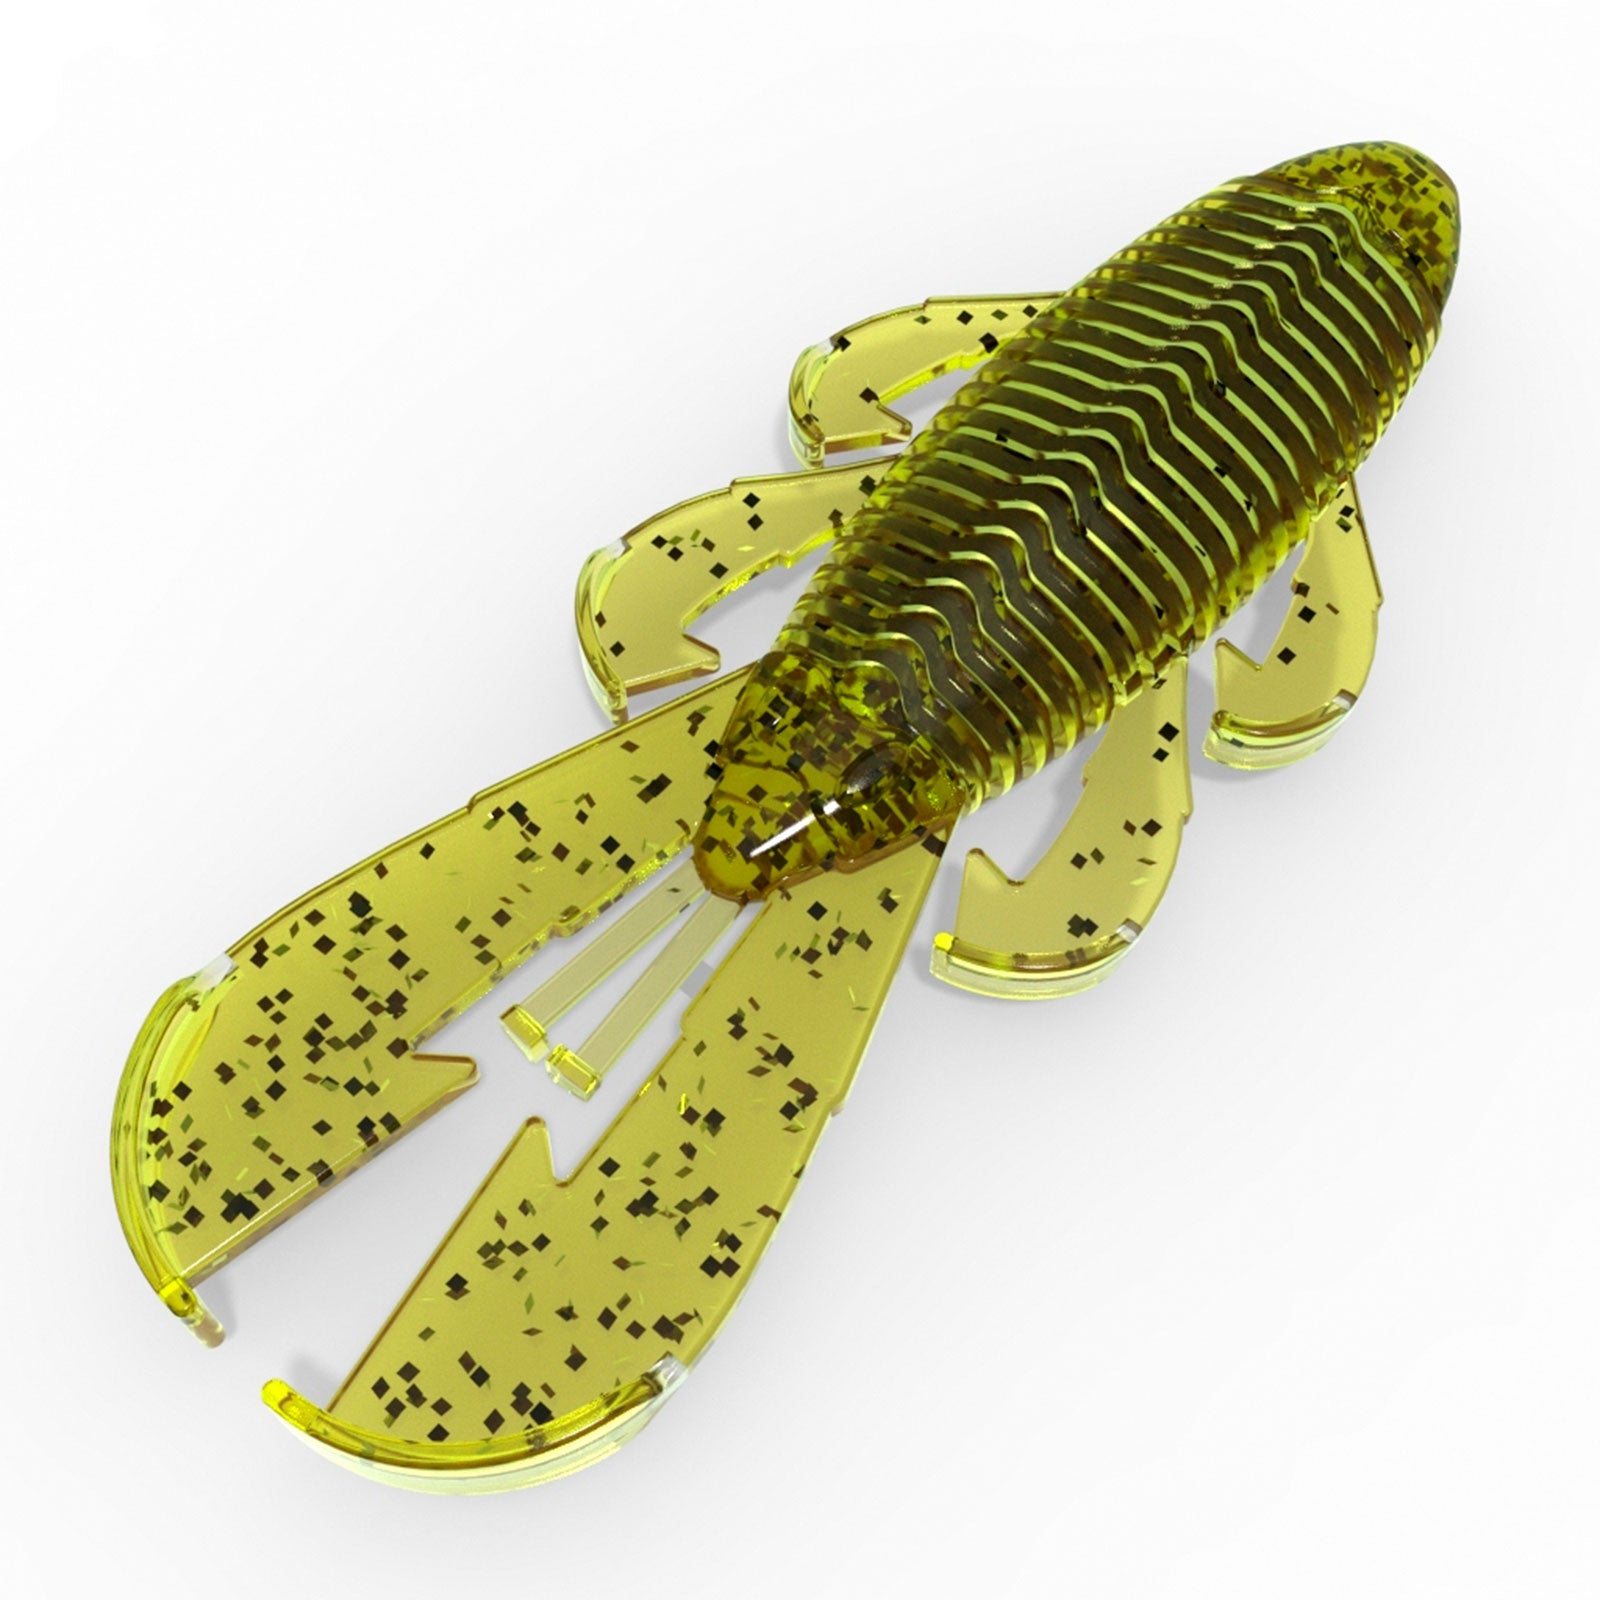  Smedioks Premium Soft Plastiс Mold Lure Making Injection Molds  Fishing Lures 2 Cavity Googan Bandito Bug 4'' : Sports & Outdoors